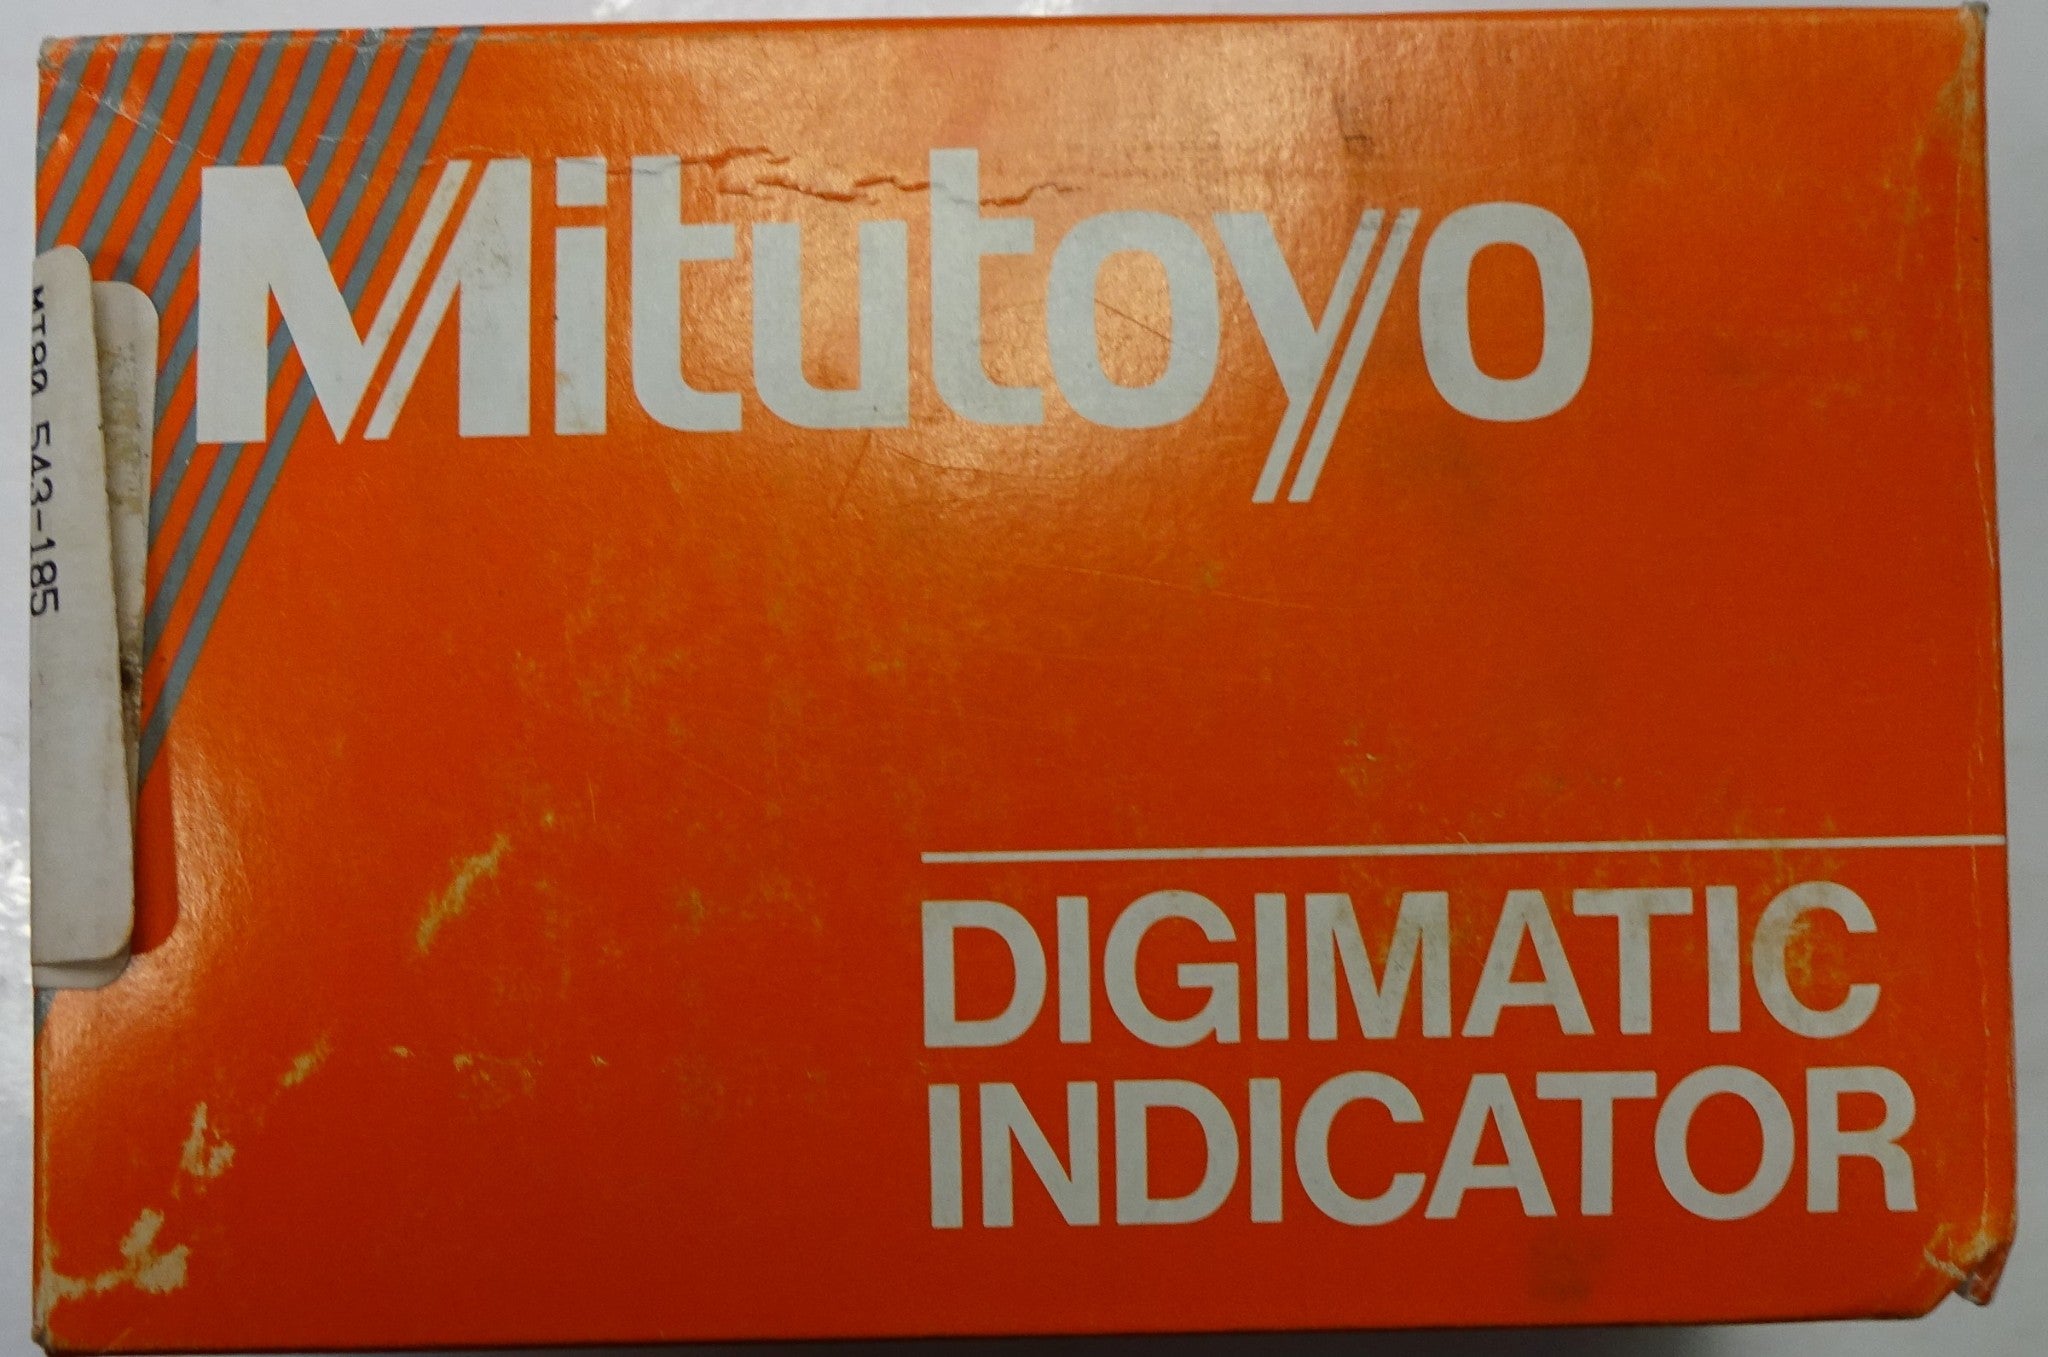 MITUTOYO 543-185 Digimatic Indicator 0-.5"/0-12.7MM Range .0001"/0.001MM Resolut